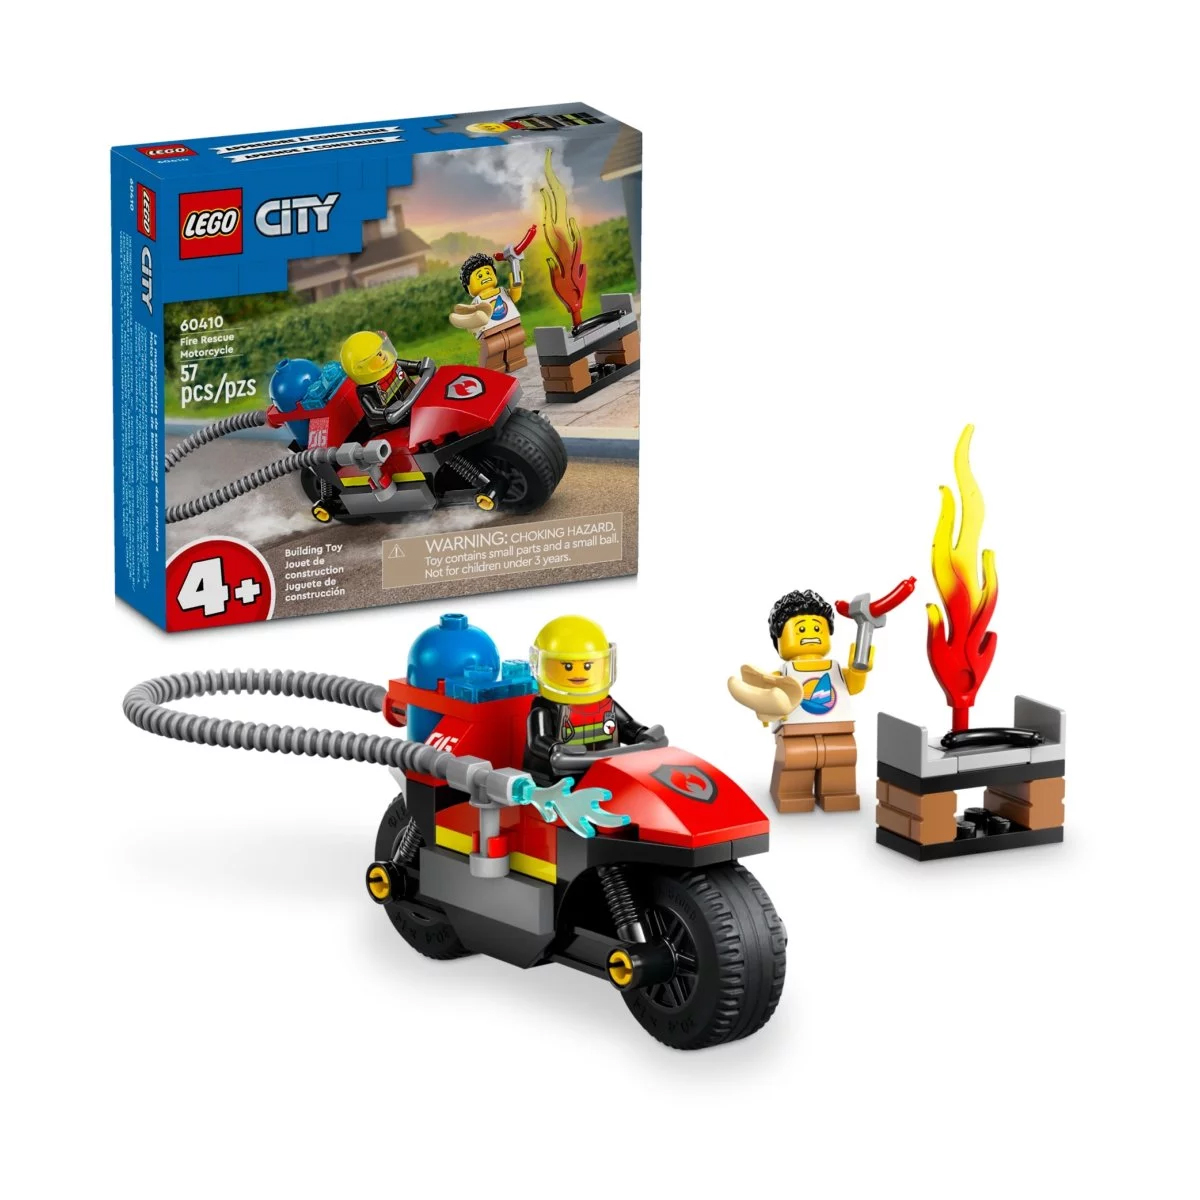 Конструктор Lego City Fire Rescue Motorcycle 60410, 57 деталей конструктор lego city fire rescue motorcycle 60410 57 деталей